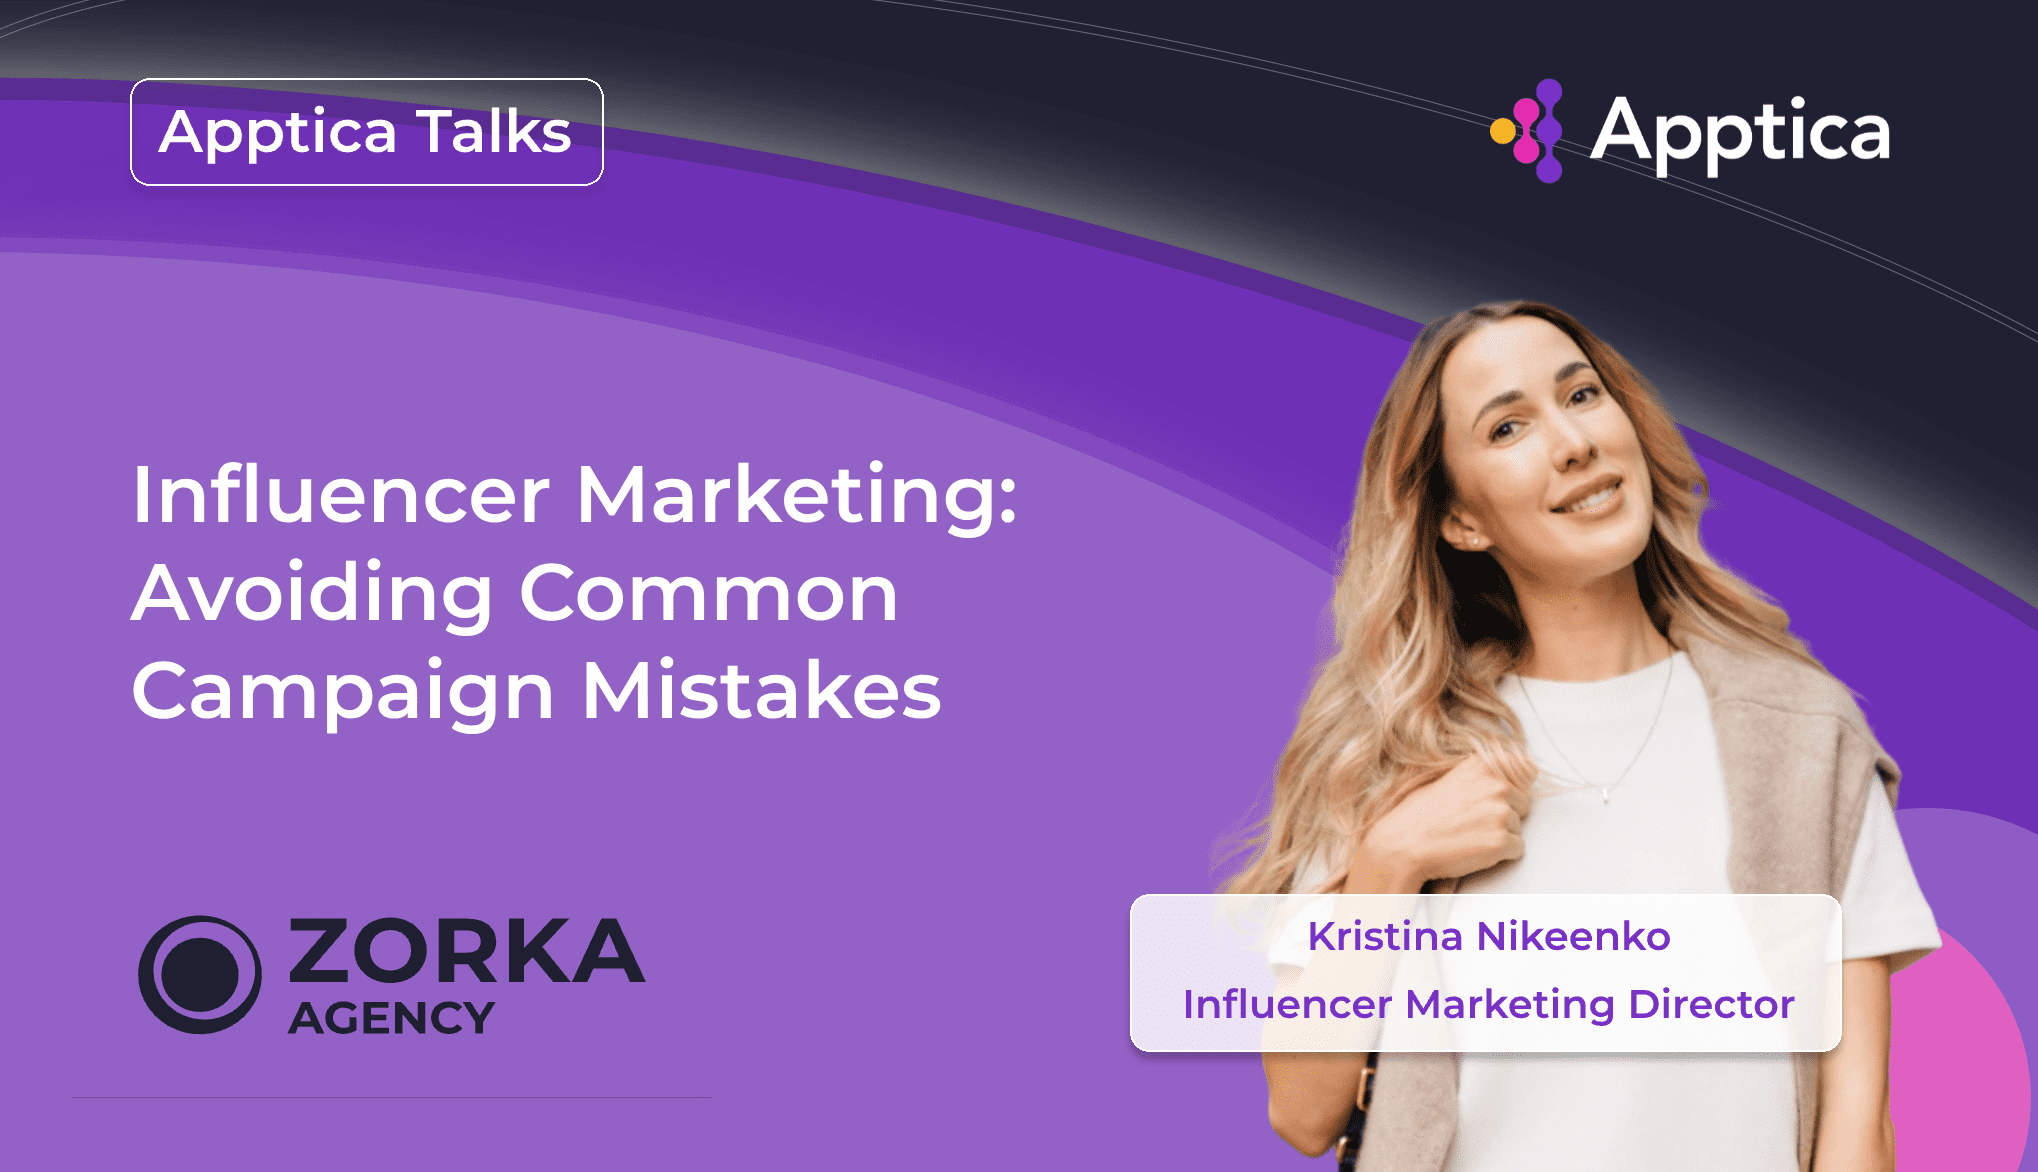 Apptica Talks. Episode #4. Influencer Marketing: Avoiding Common Campaign Mistakes with Kristina Nikeenko from Zorka.Agency